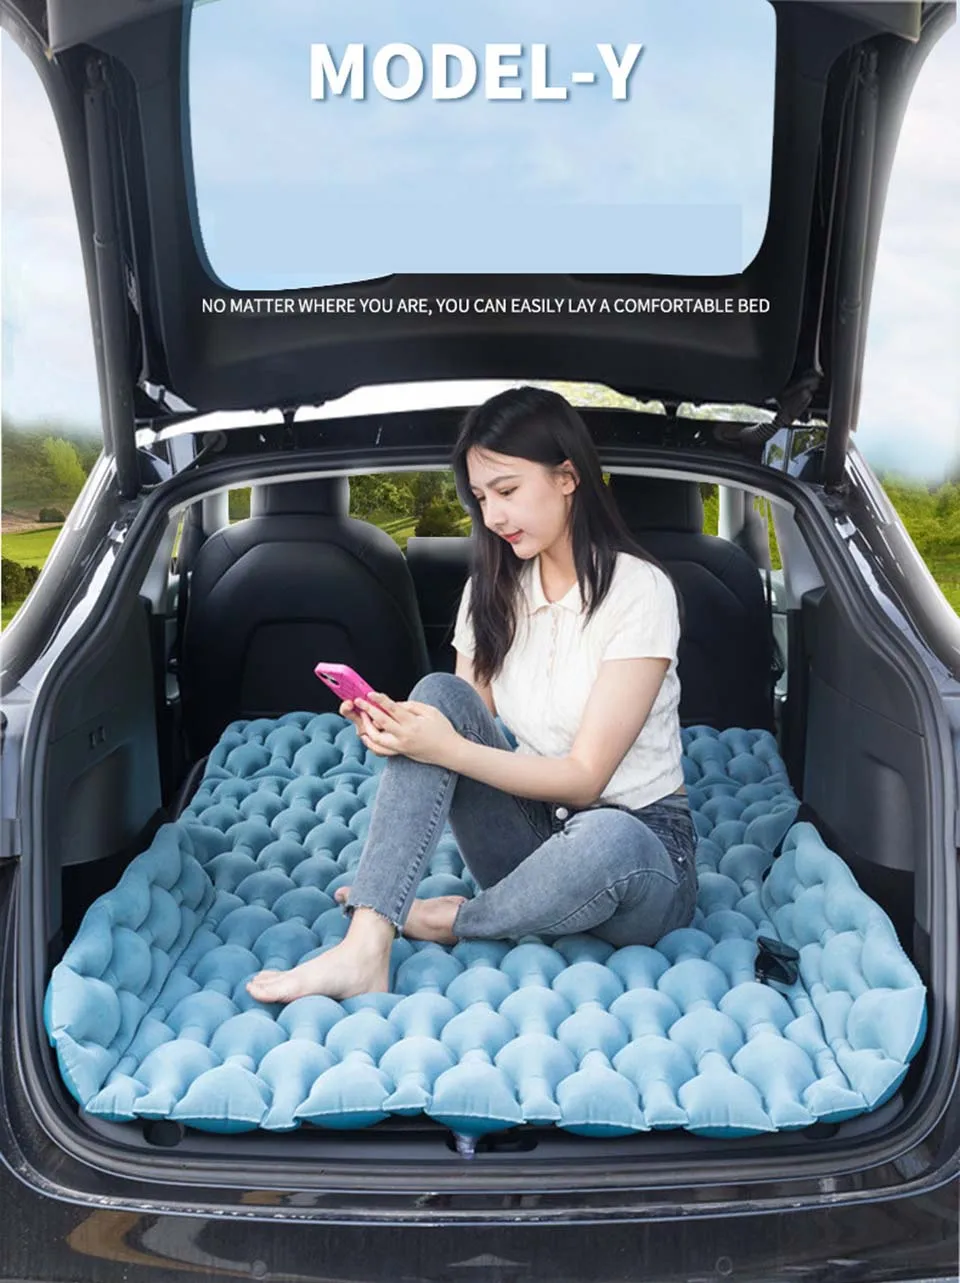 Colchón de aire Inflable Para Dormir, accesorios de cama de Camping Para Coche, modelo Tesla Y